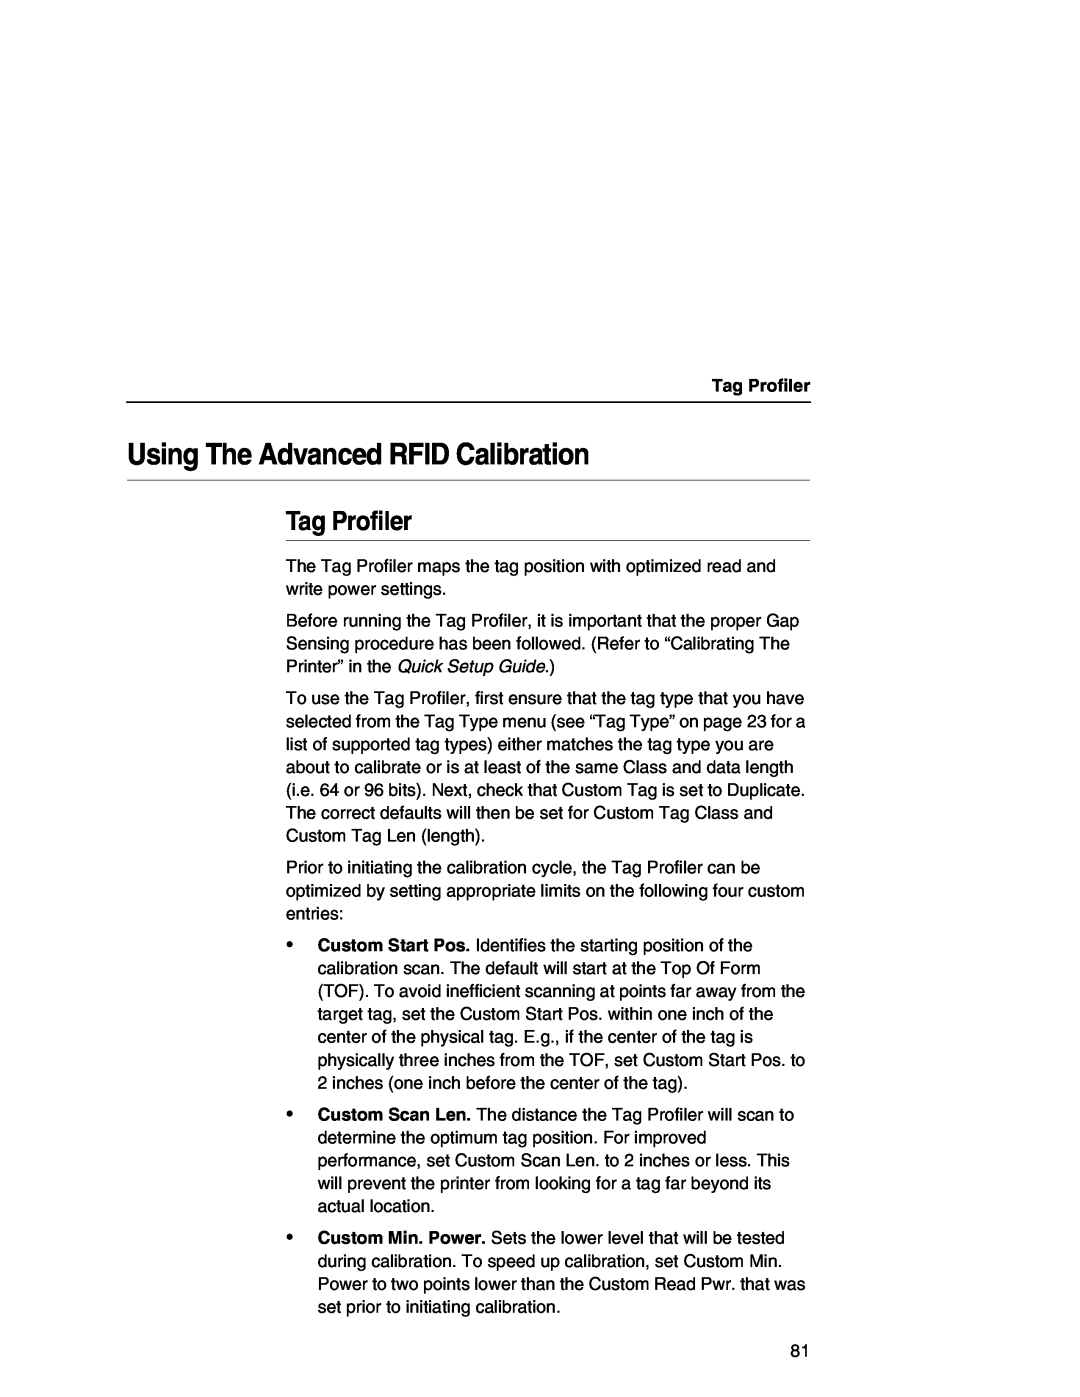 Printronix SL5000r MP manual Using The Advanced RFID Calibration, Tag Profiler 